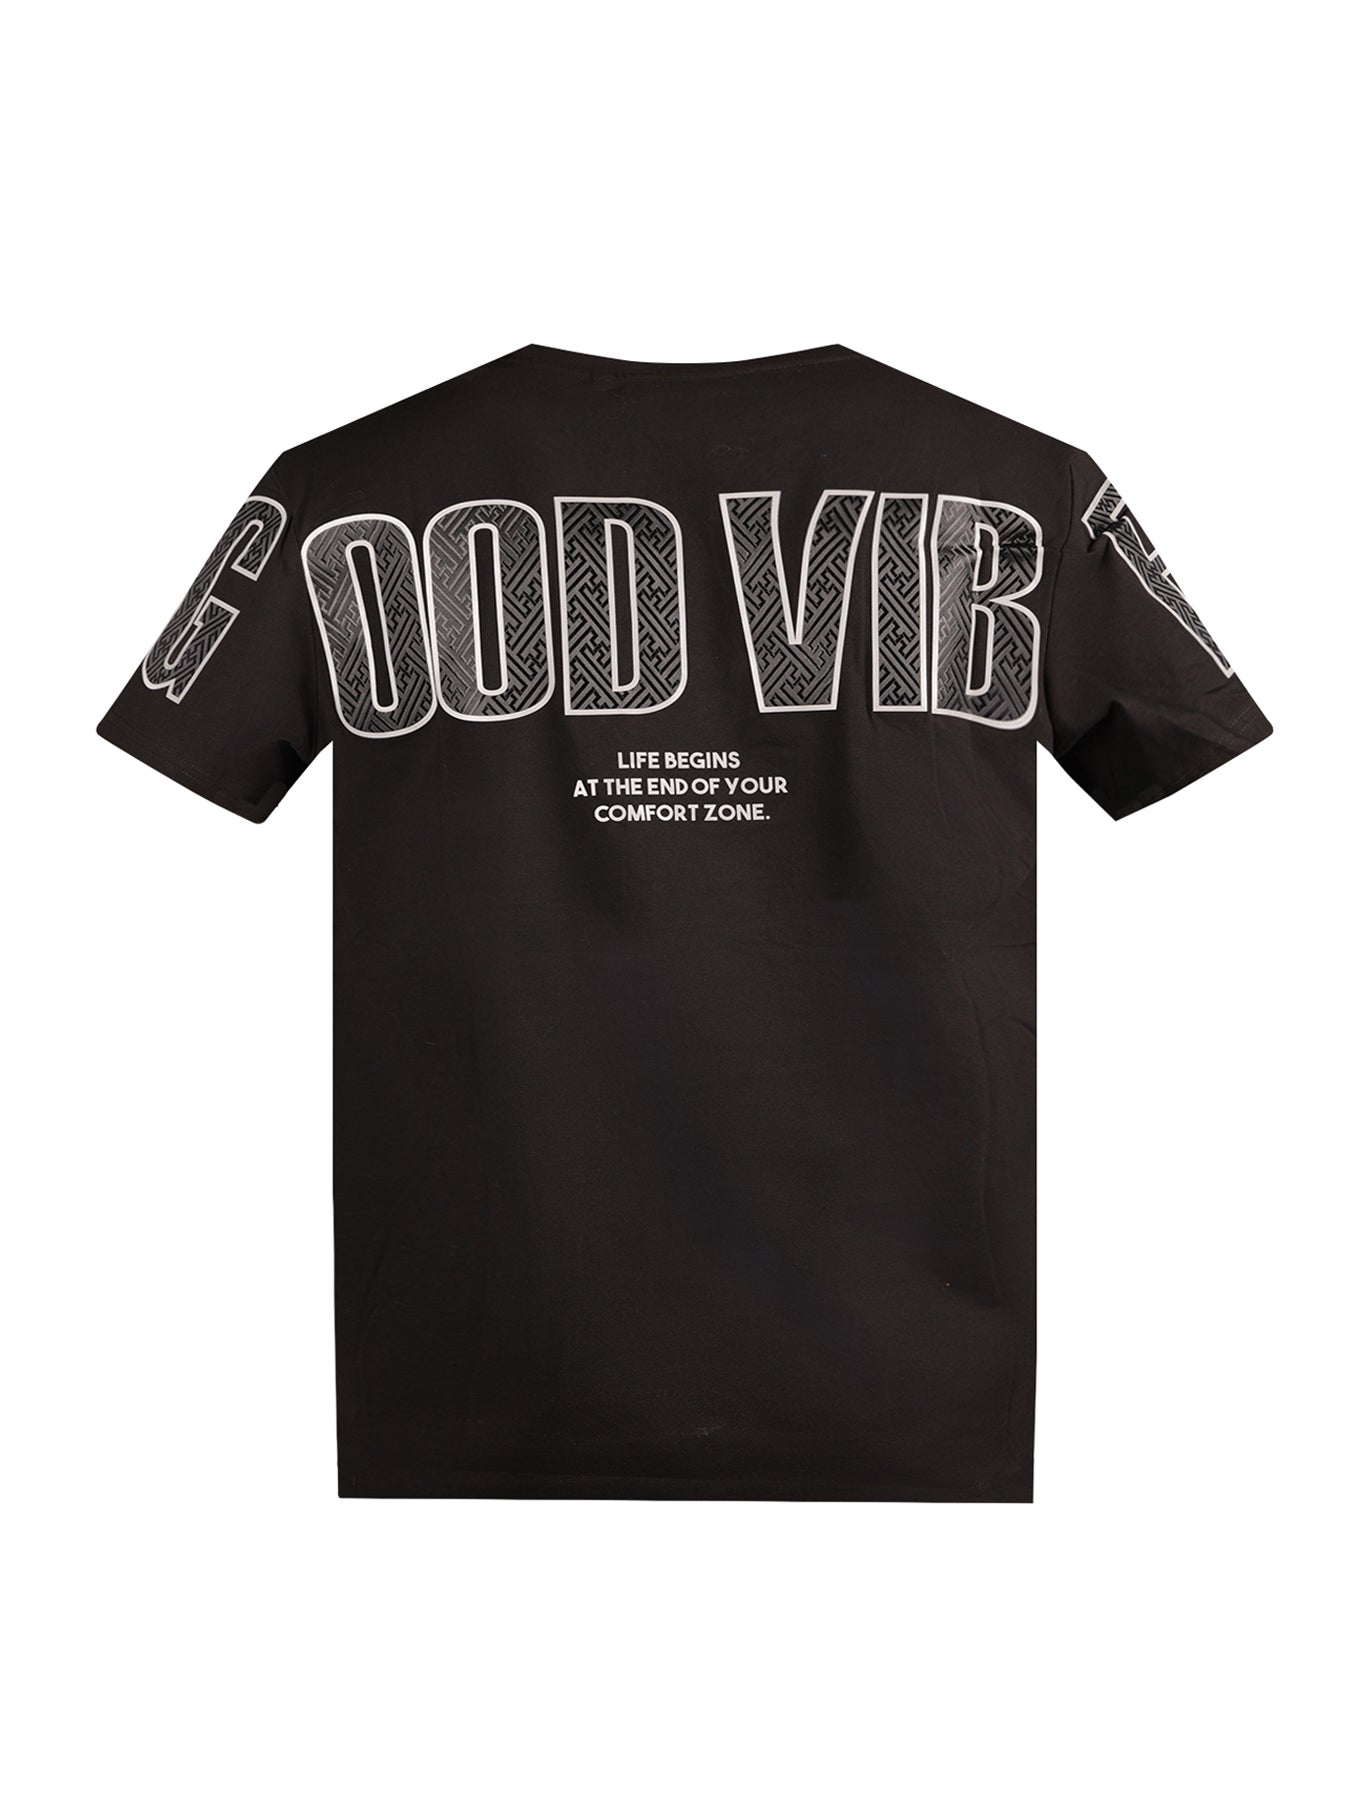 "Good Vibe" Graphic Tee